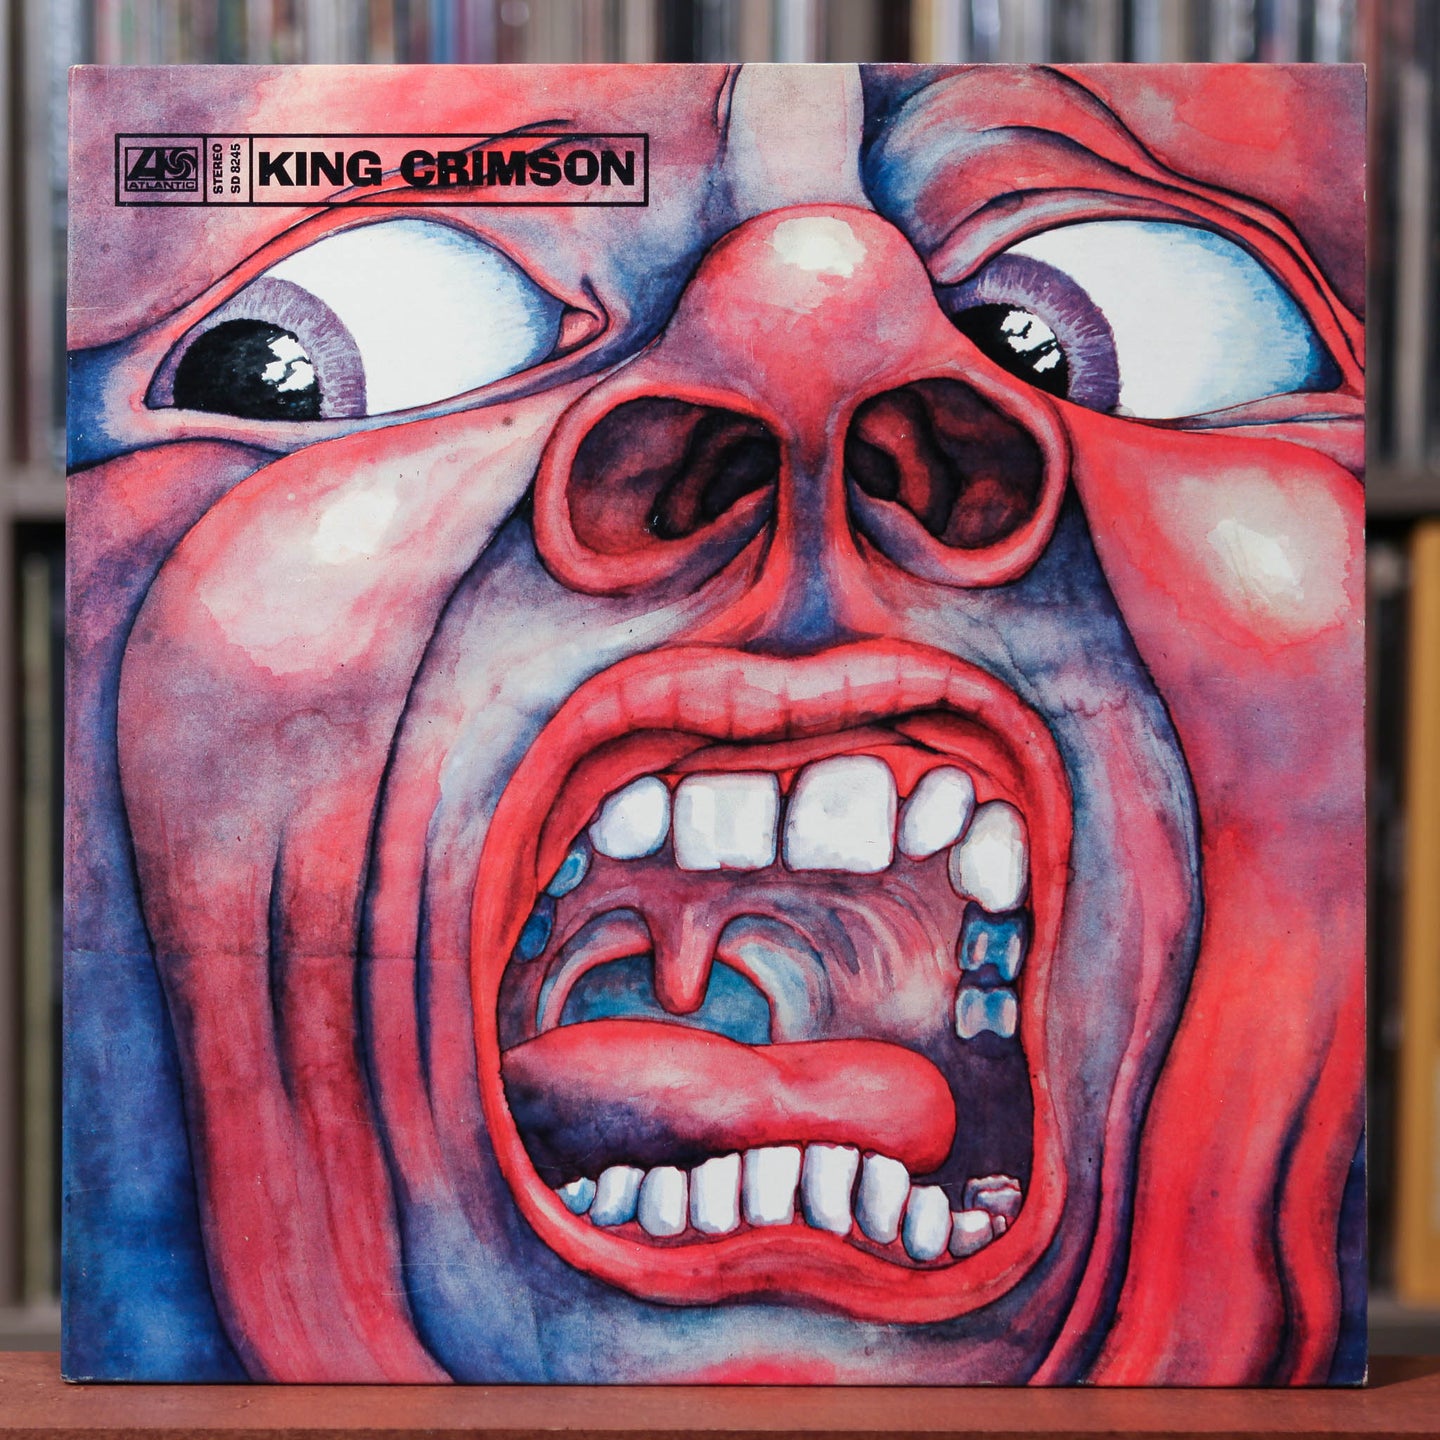 King Crimson - In The Court of the Crimson King - Canadian Import - 1972 Atlantic, EX/VG+